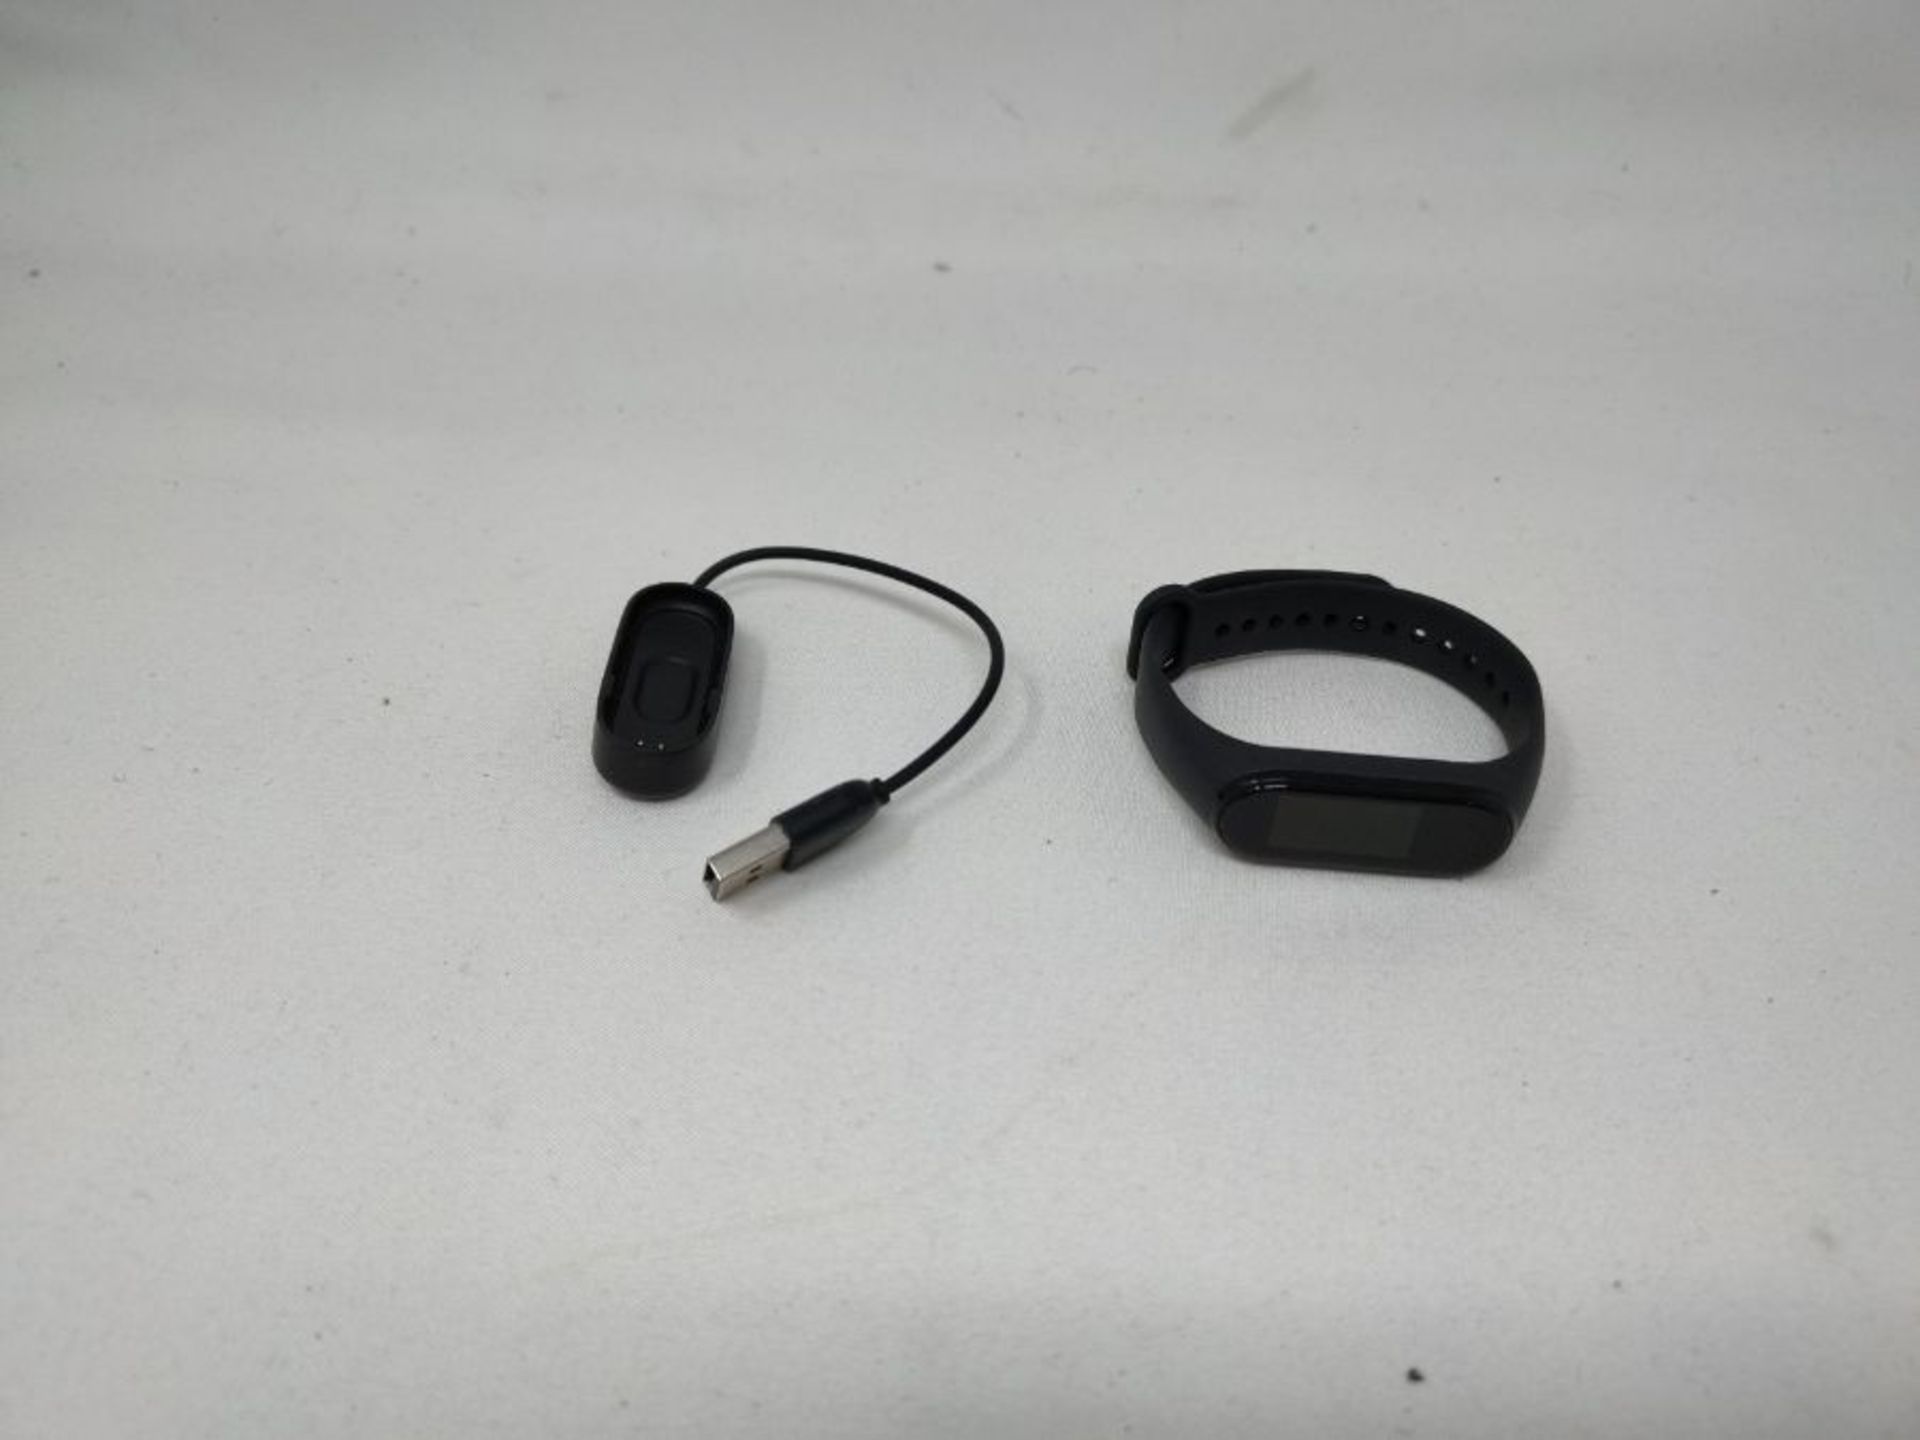 Mi Band 4 Global Bluetooth 5.0 Heart Rate Monitor Bracelet Music Sport Pedometer - Image 3 of 3